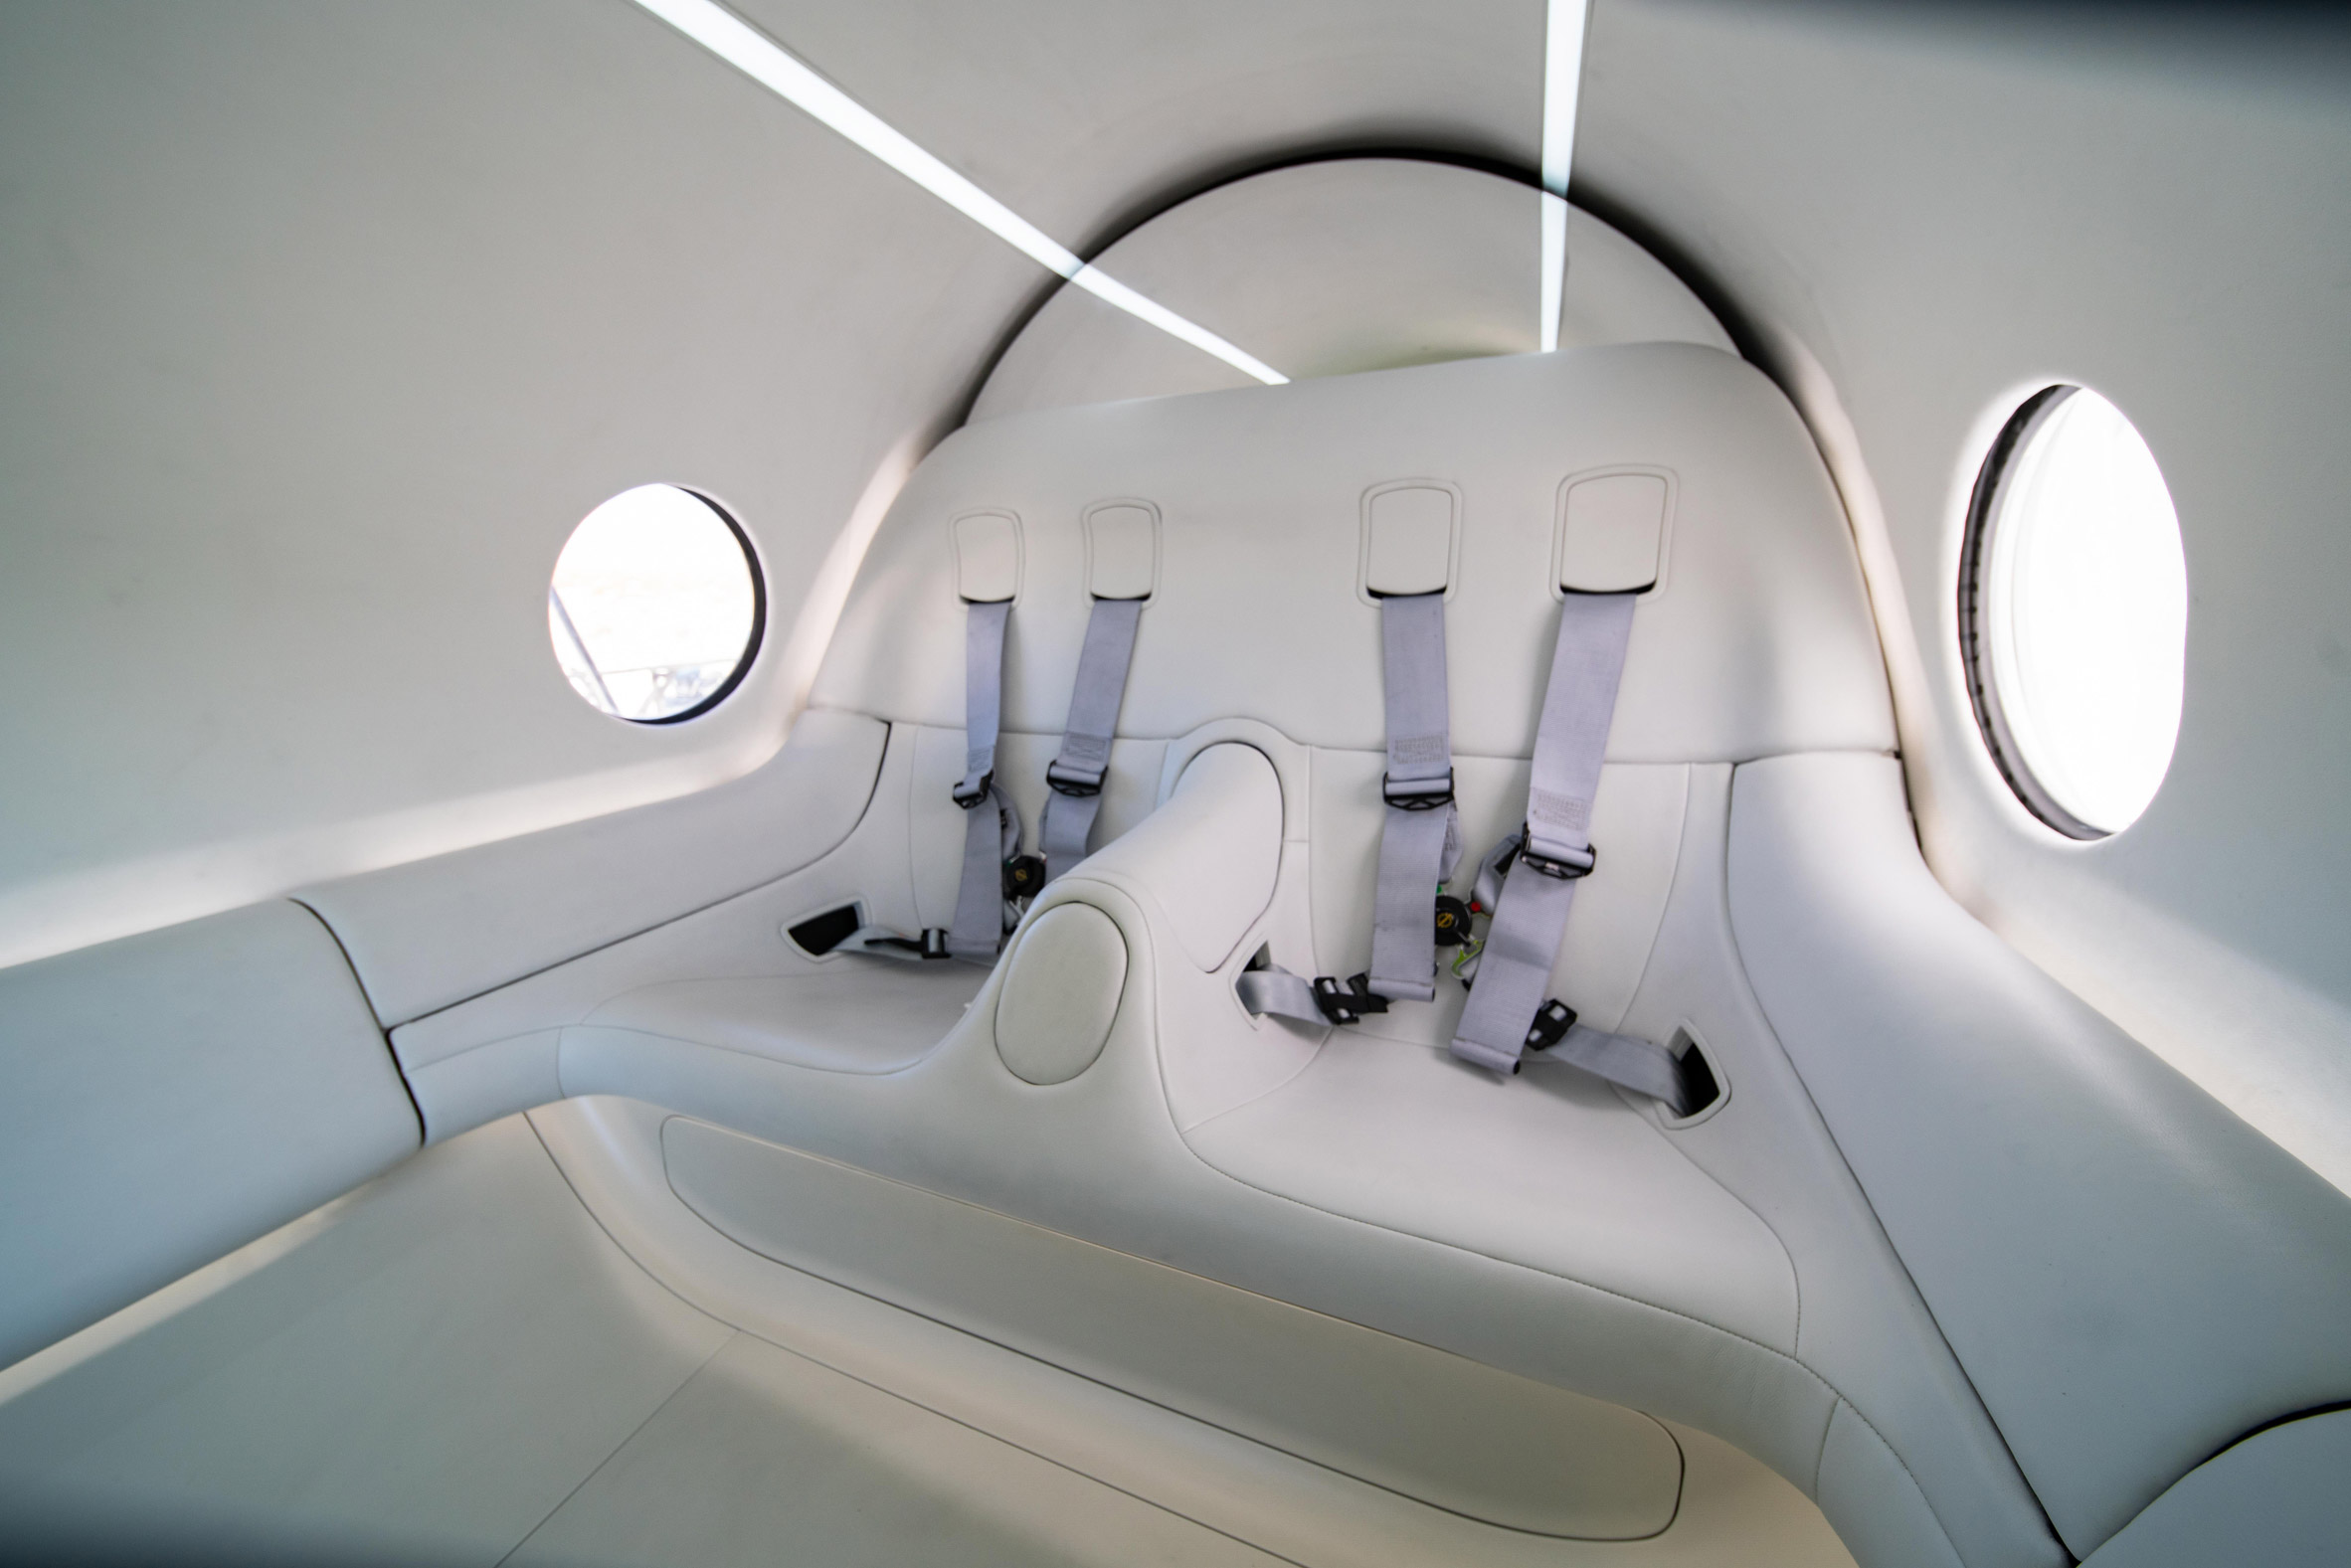 Interior of the BIG-designed hyperloop capsule